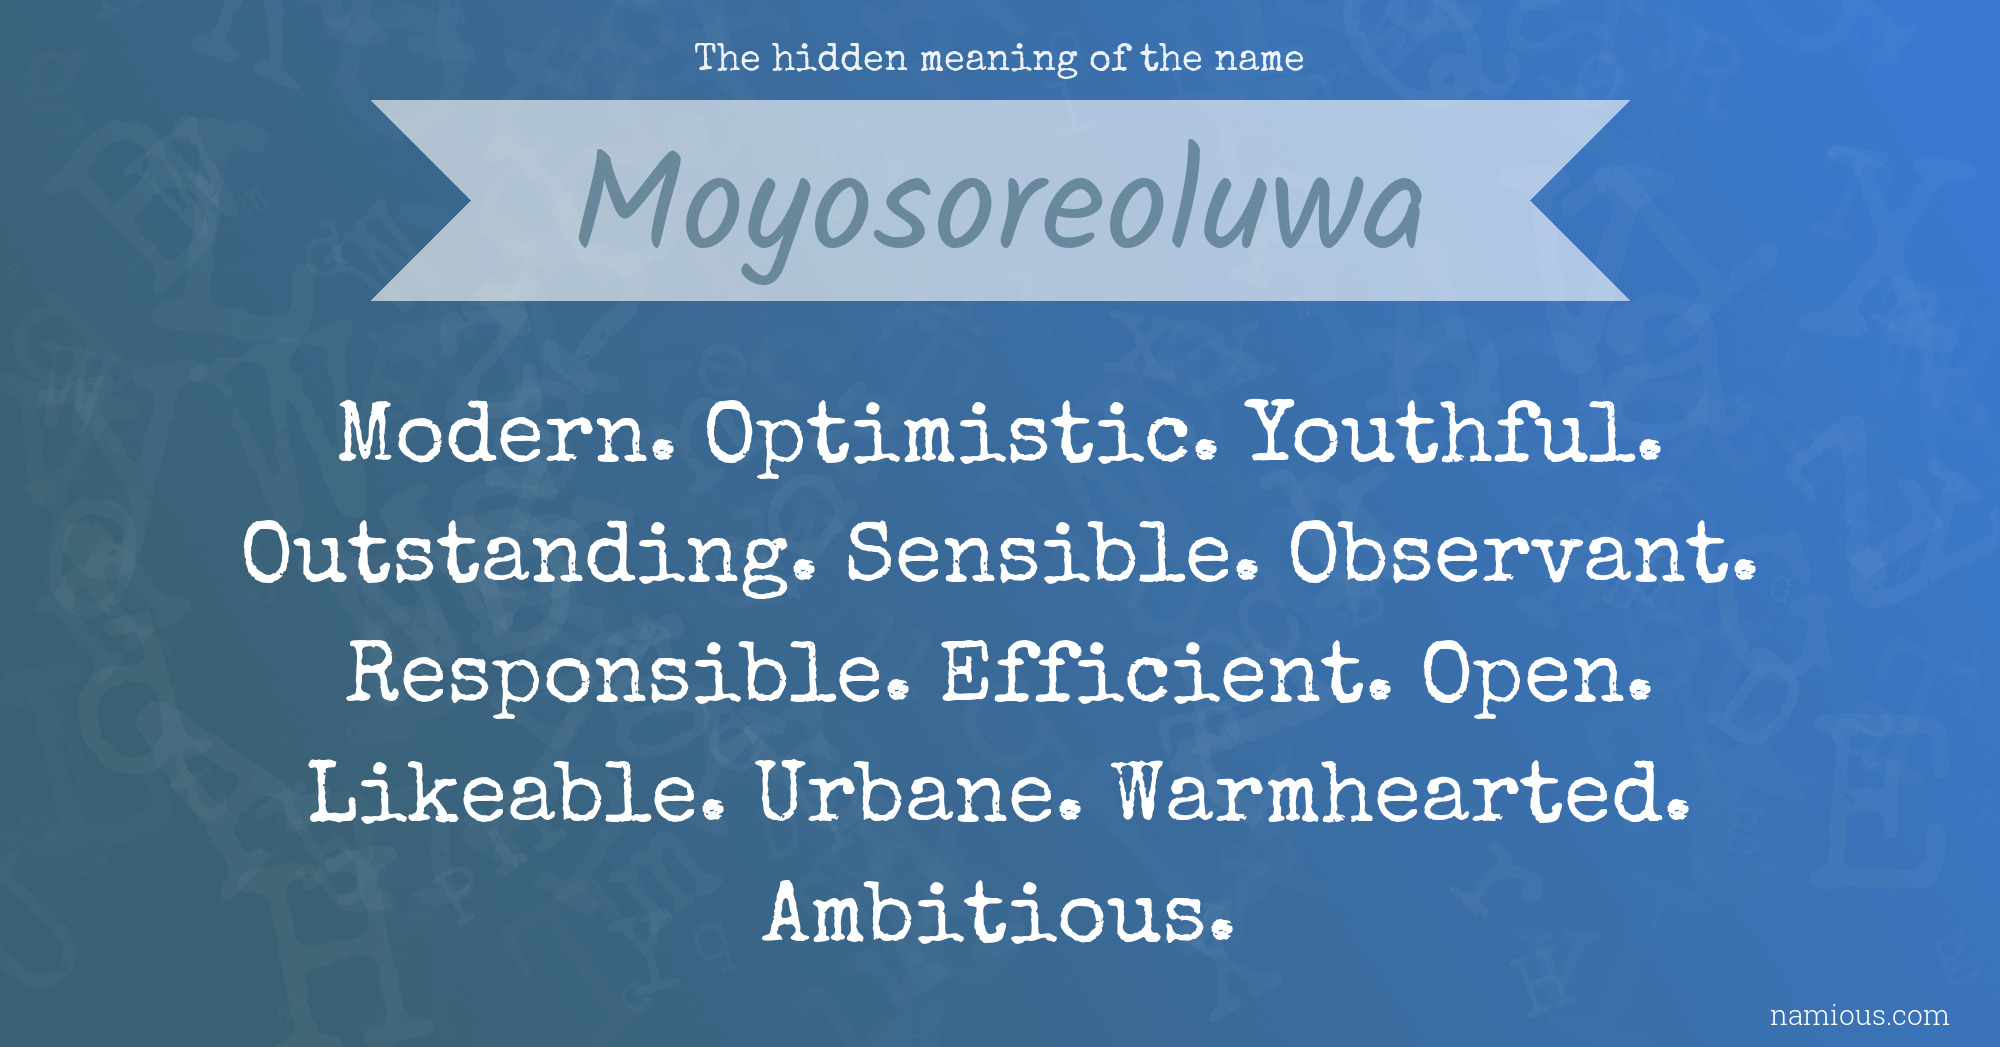 The hidden meaning of the name Moyosoreoluwa